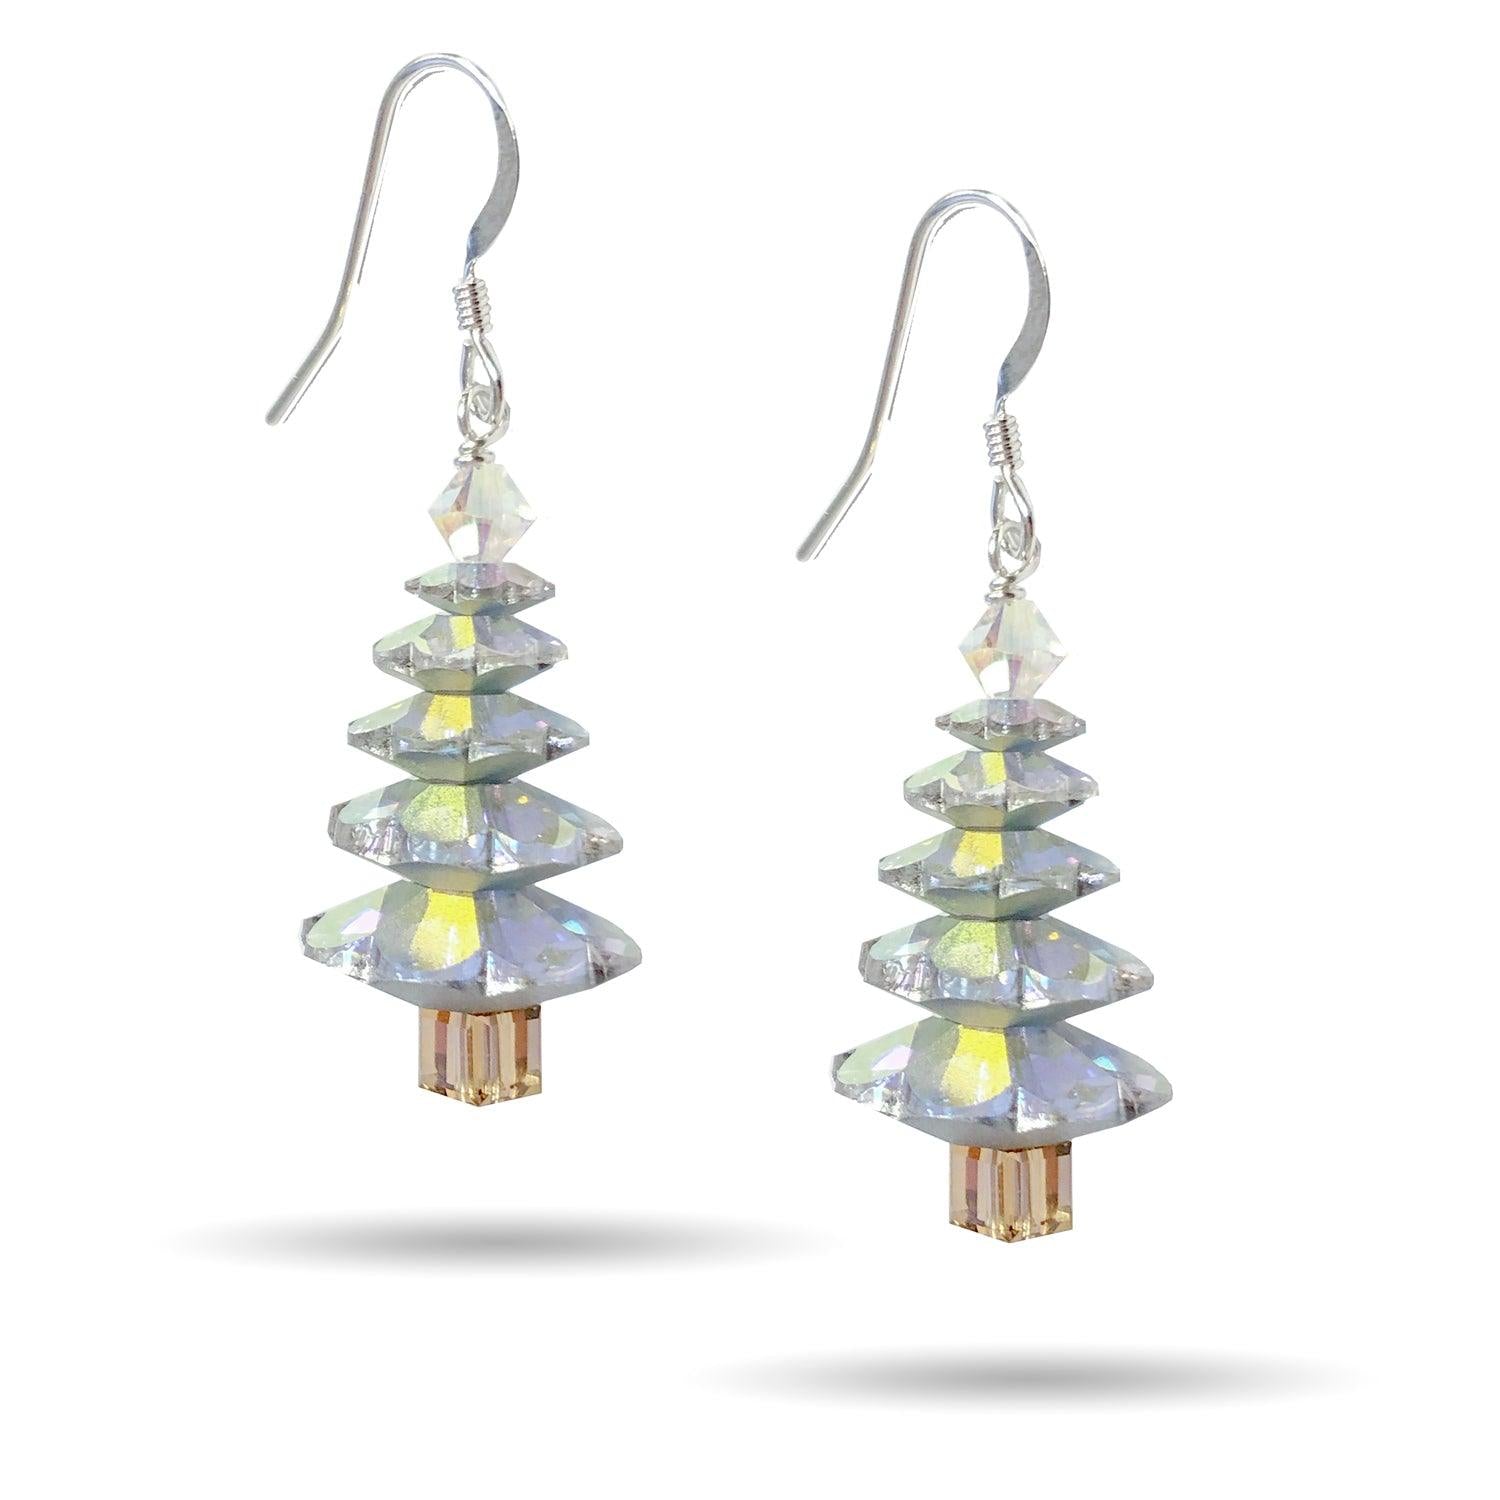 5 Tier Christmas Tree Earring Kit - Crystal AB Foiled